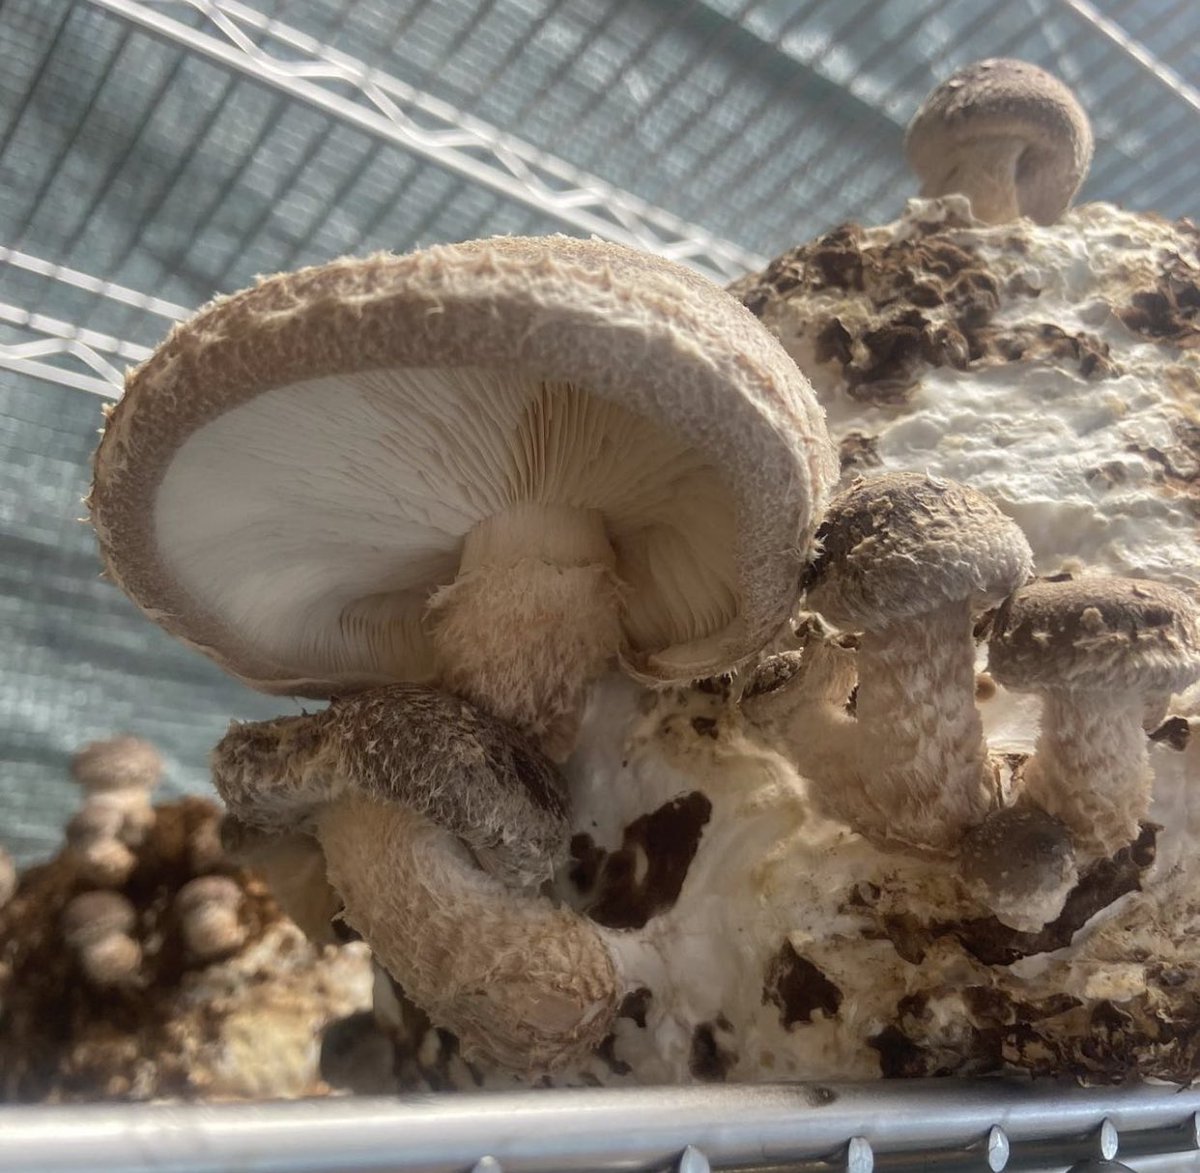 Making sure the farm stays save for my mushrooms 🍄 #mushrooms #psychedelics #mushroomfarm #mushroom #psilocybin #ediblemushrooms #trippymushrooms #planting #colorado #denver #chicago #florida #mushroomshouse #goodtrip #fungus #fungi growing mushrooms 🍄